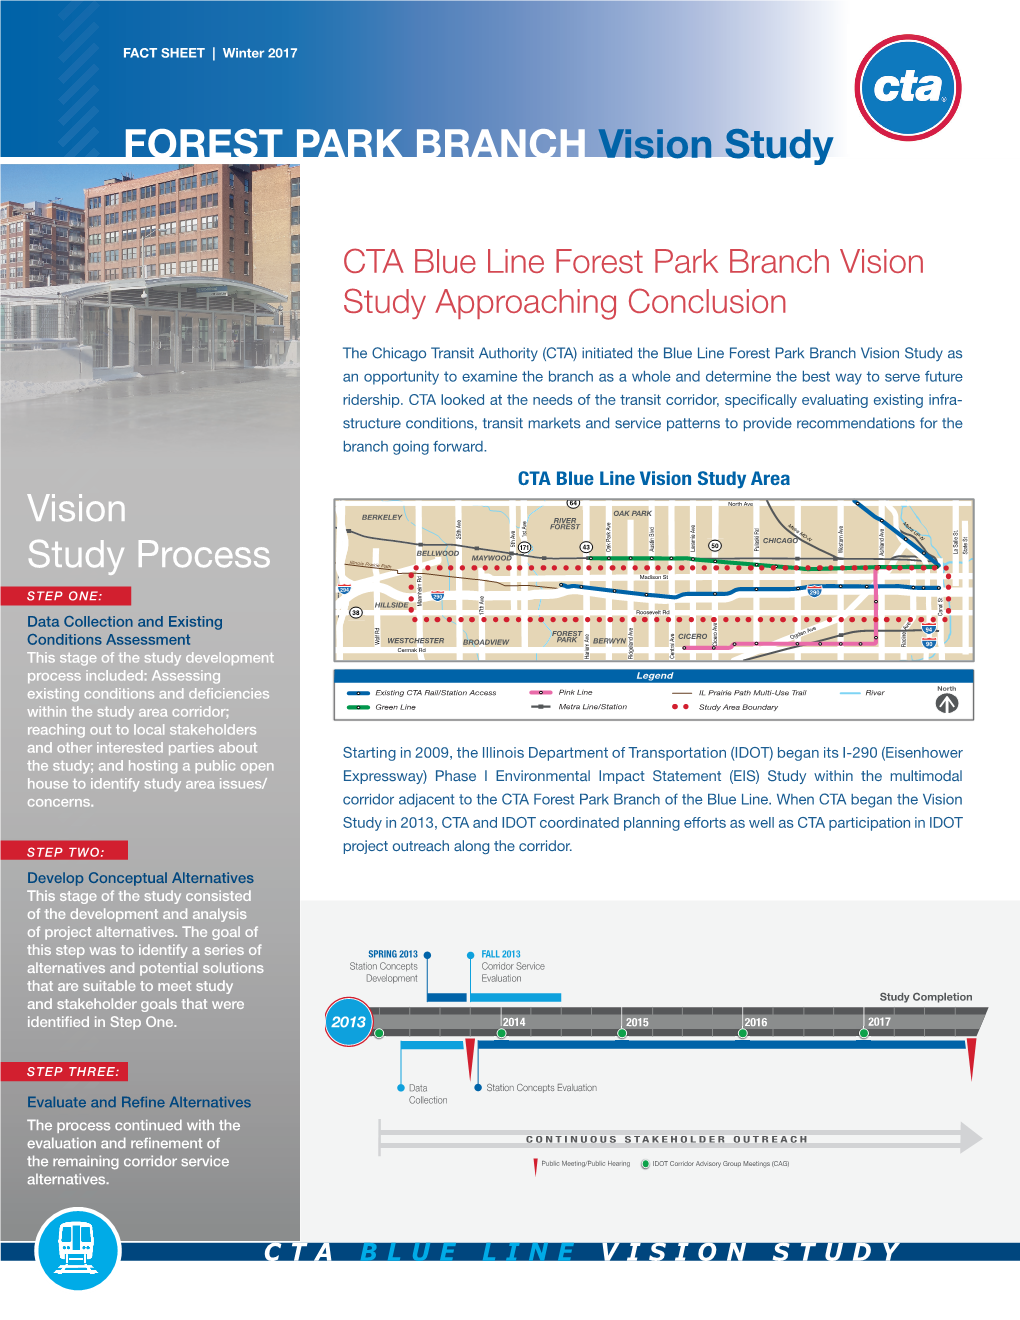 CTA Blue Line Forest Park Branch Vision Study Approaching Conclusion